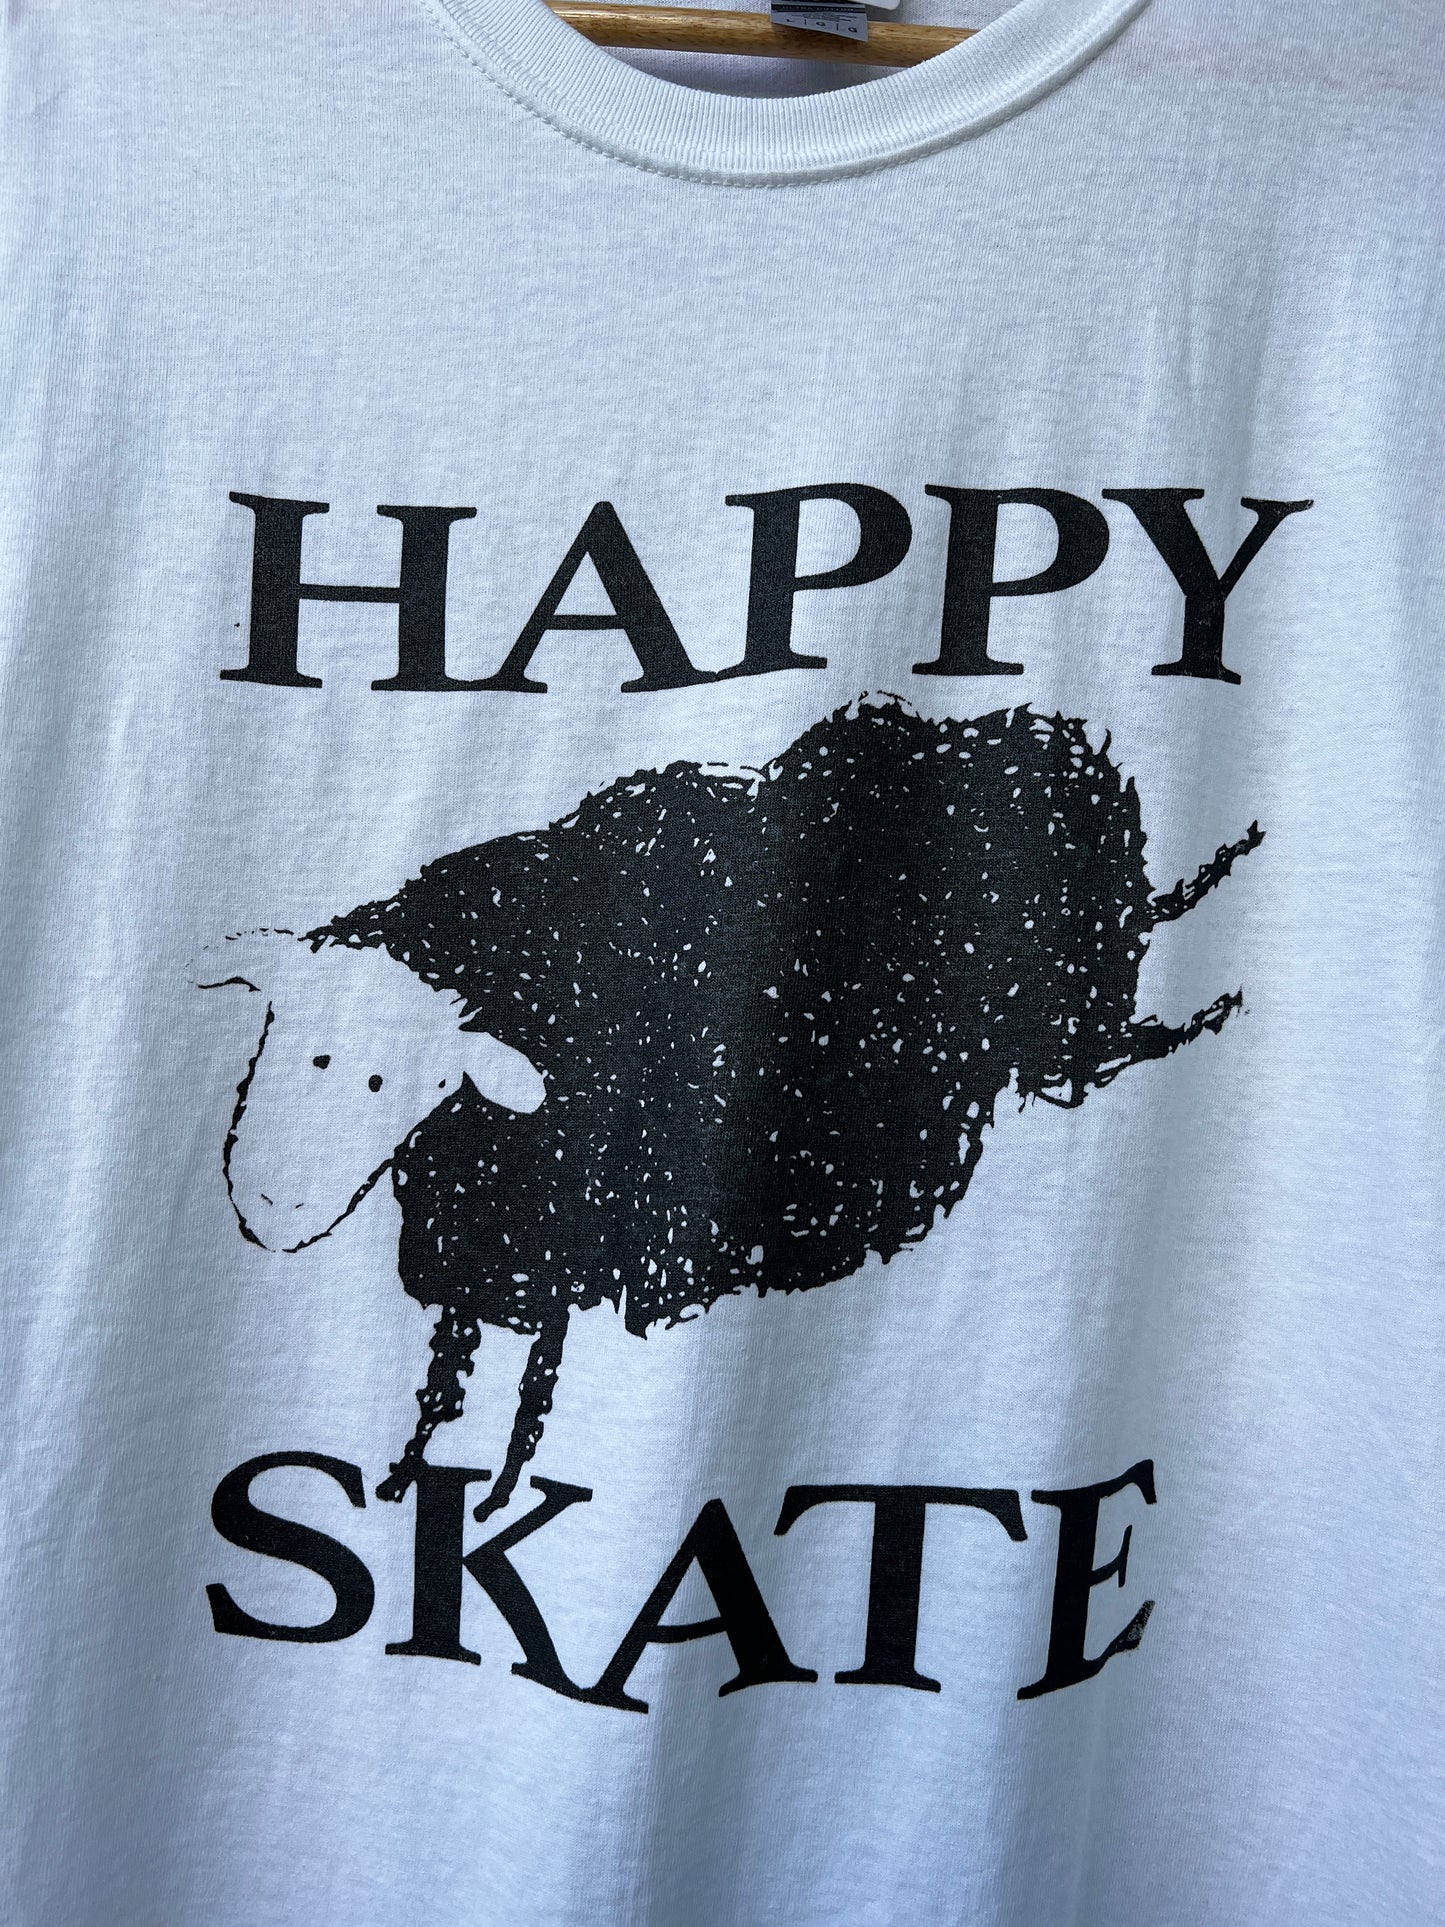 Happy Skate Black Sheep White